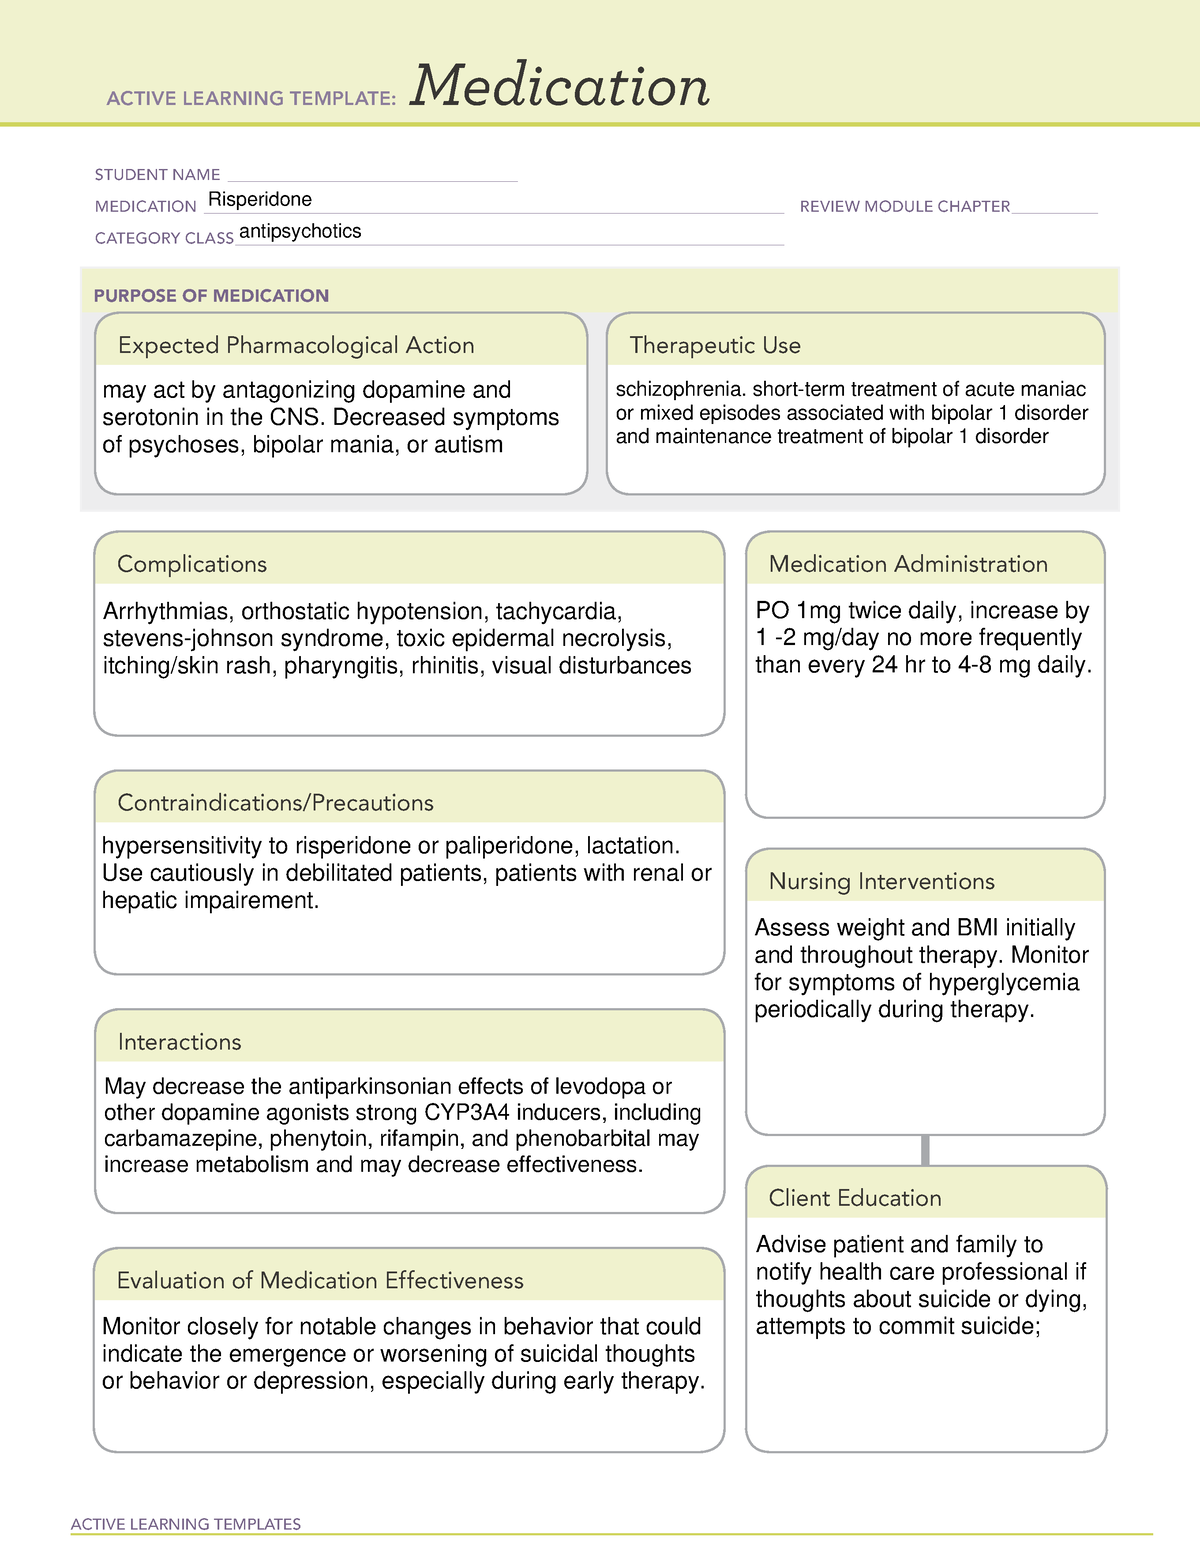 risperidone-medication-ati-template-active-learning-templates